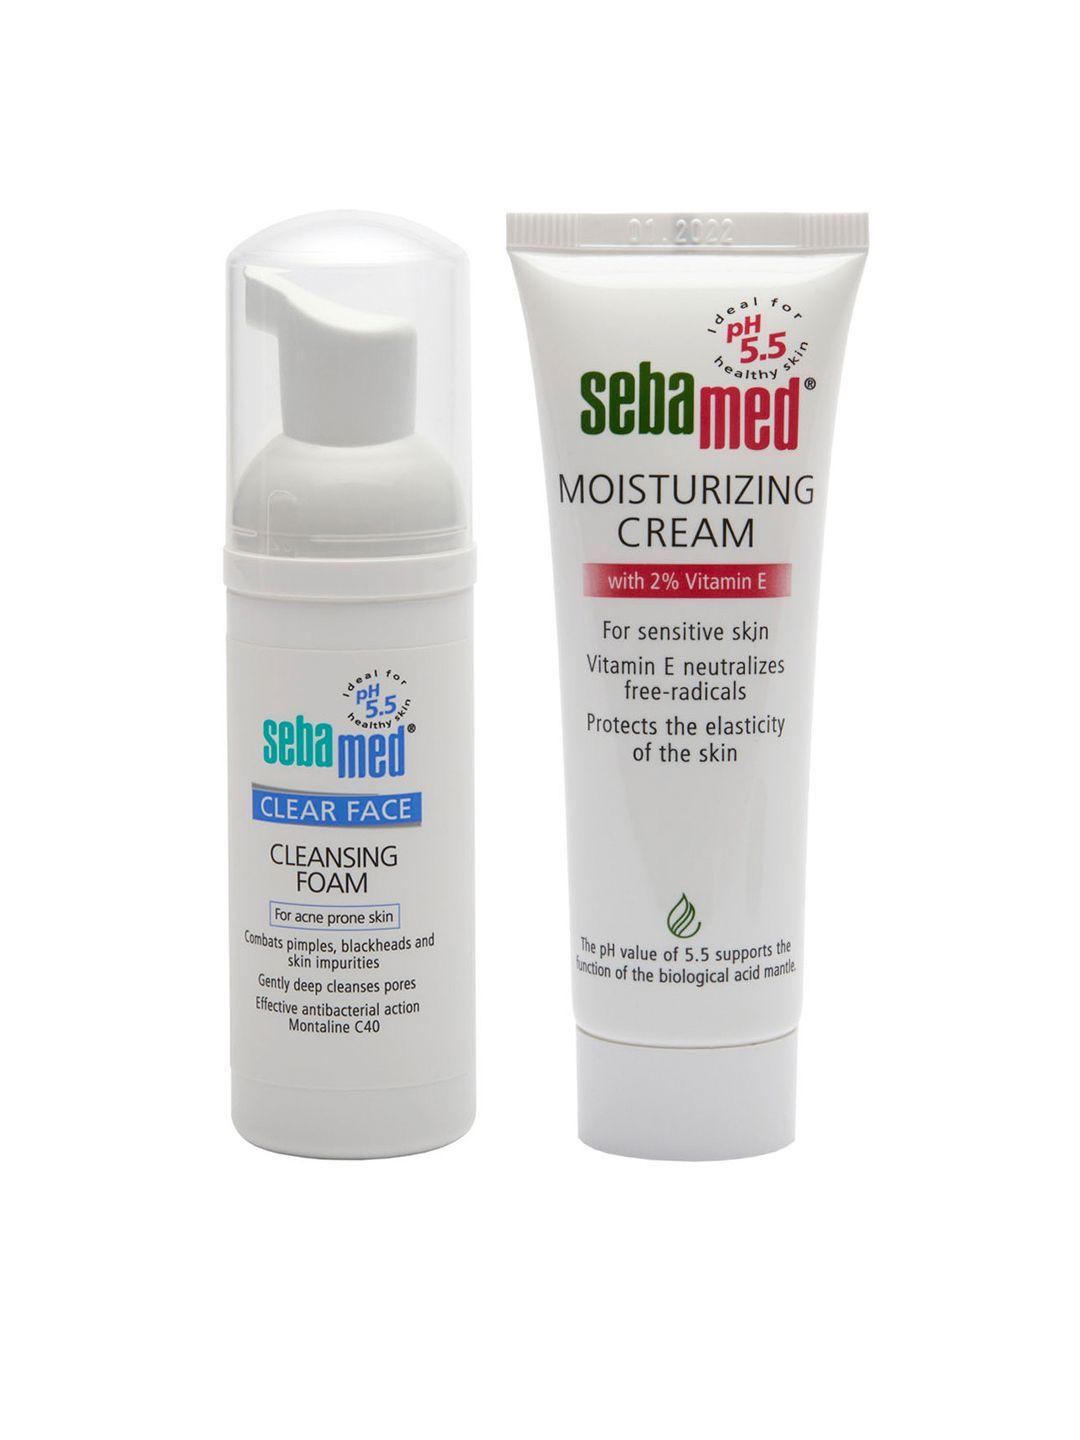 sebamed set of moisturizing cream & clear face cleansing foam